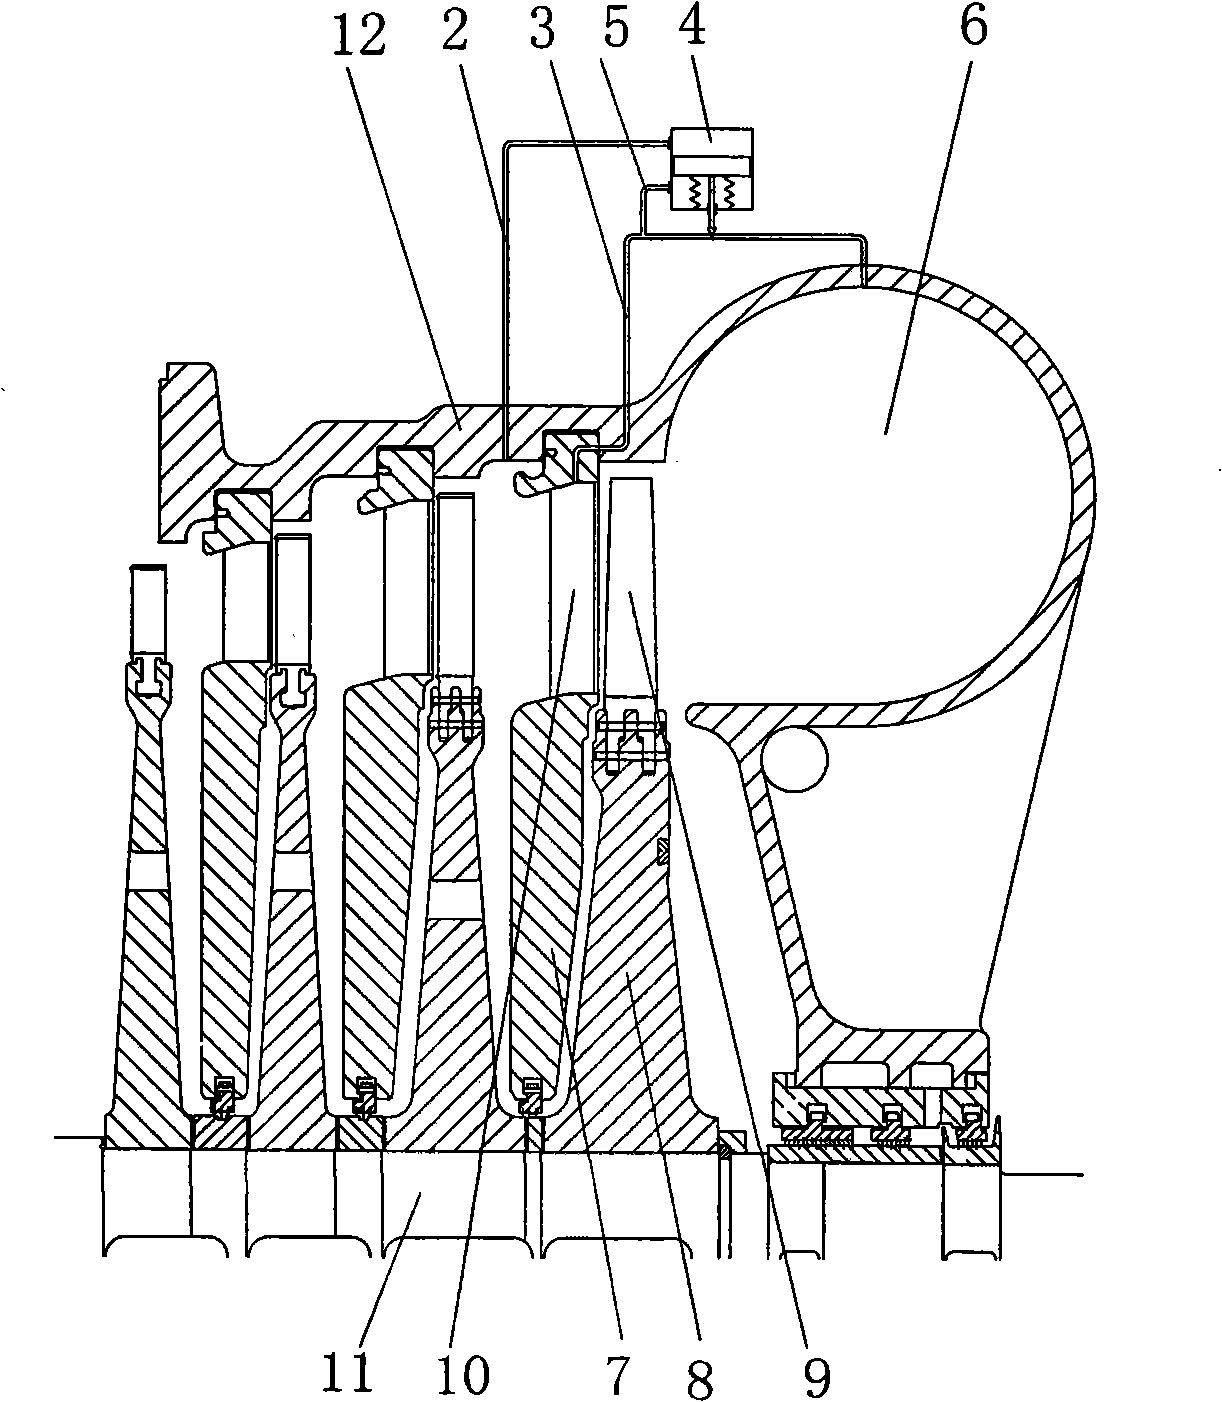 Wet vapor level suction dehumidifier for steam turbine